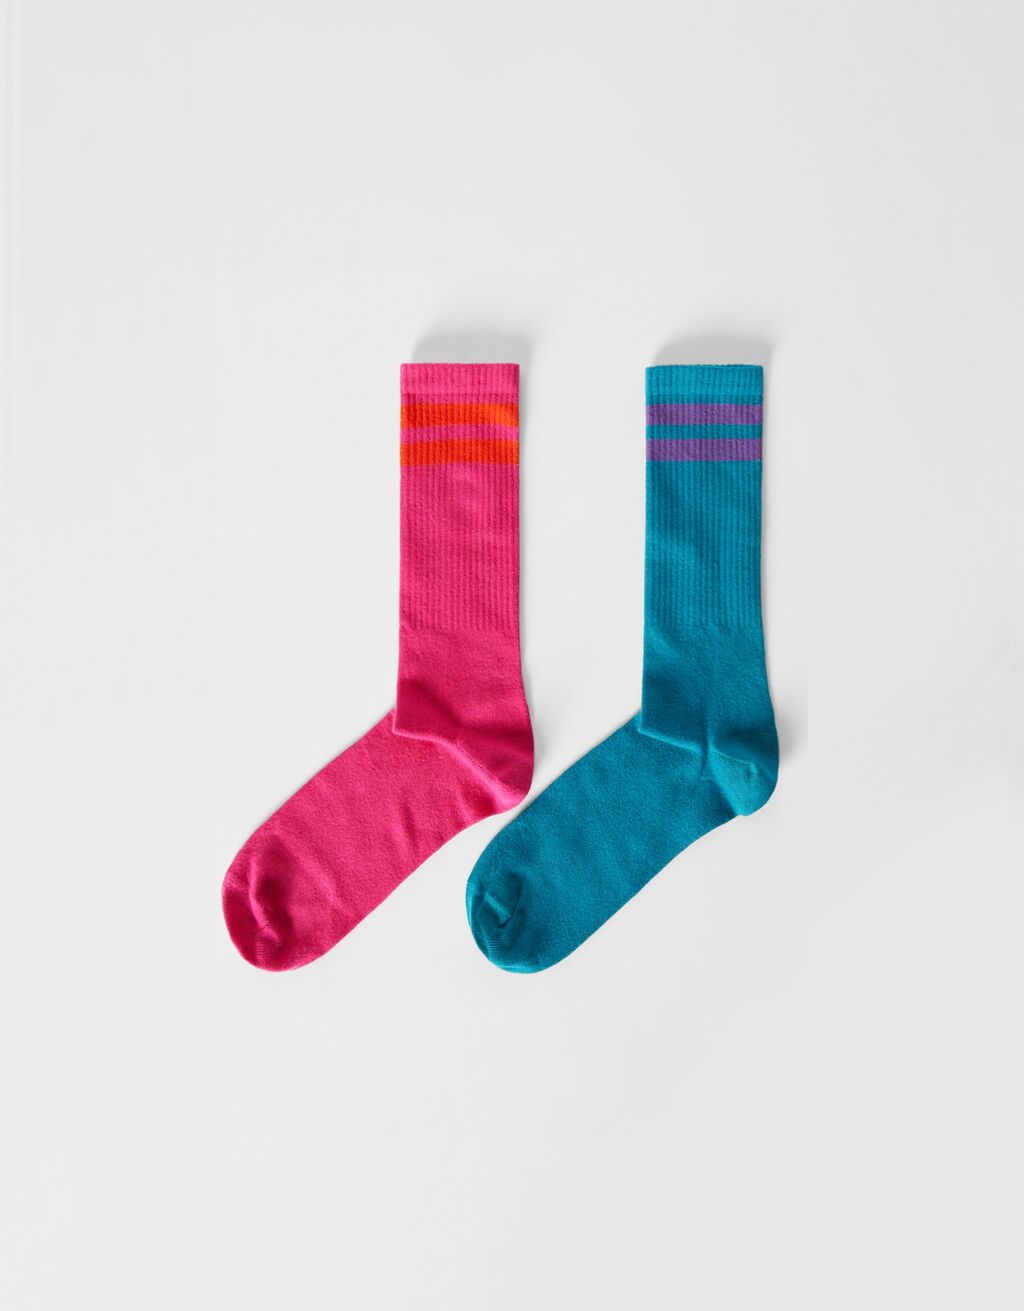 Pack of 2 pairs of color block socks.